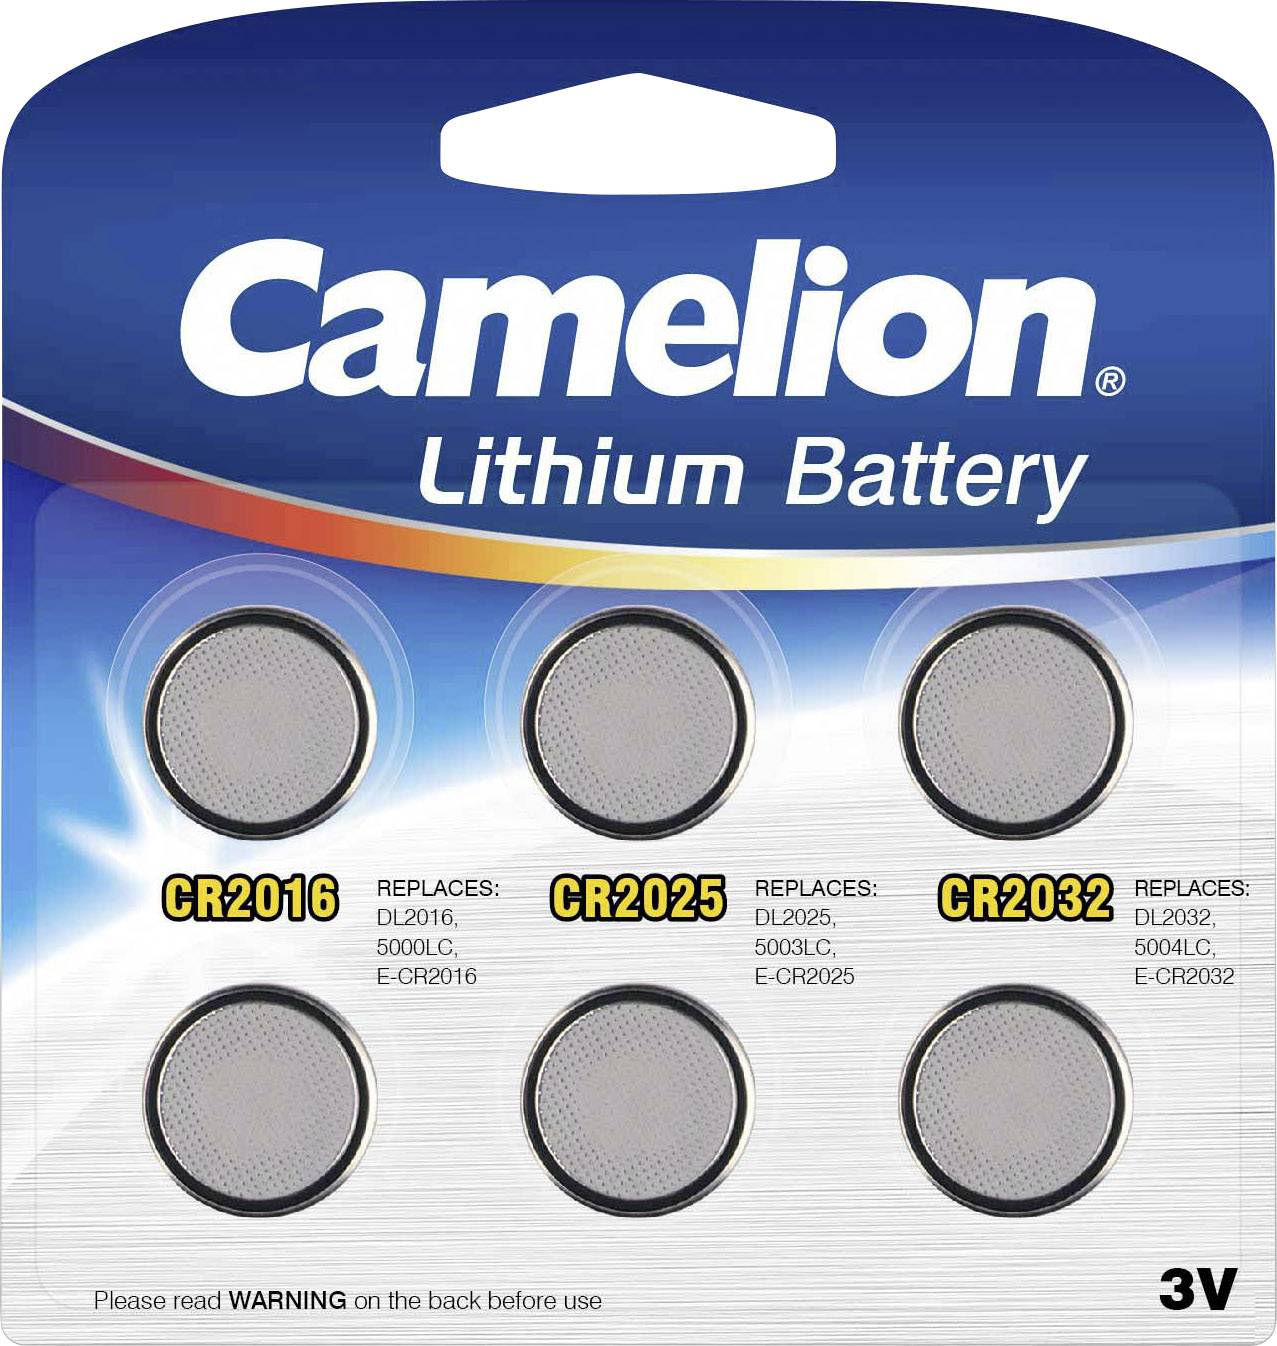 2x CR2016 Litihum 3V 2x CR2025 Camelion im Set Knopfzellen Batterien 2x CR2032 